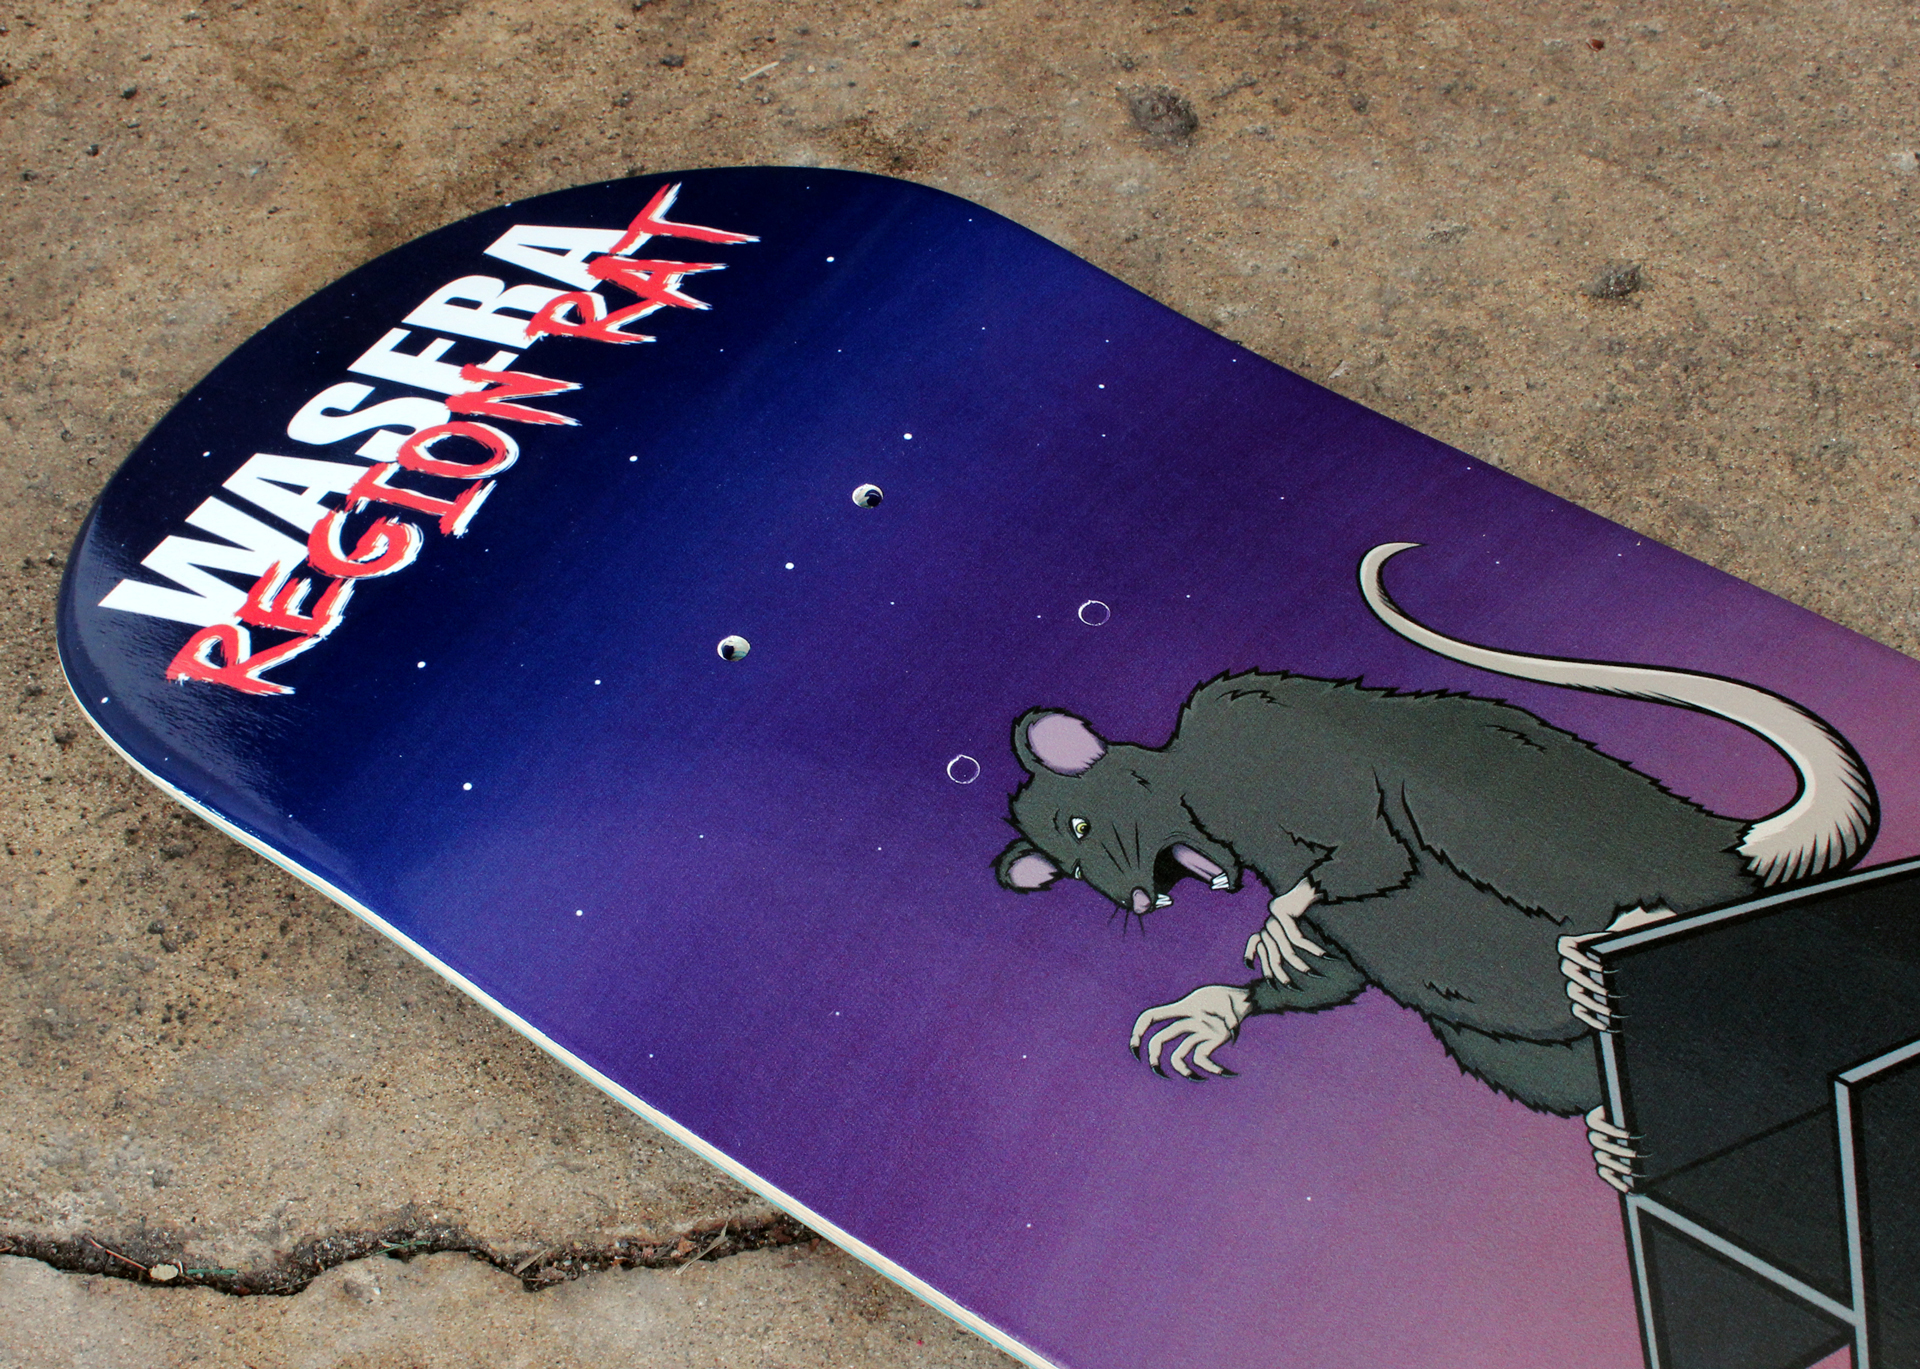 Wasera Skateboards, Region Rat graphic